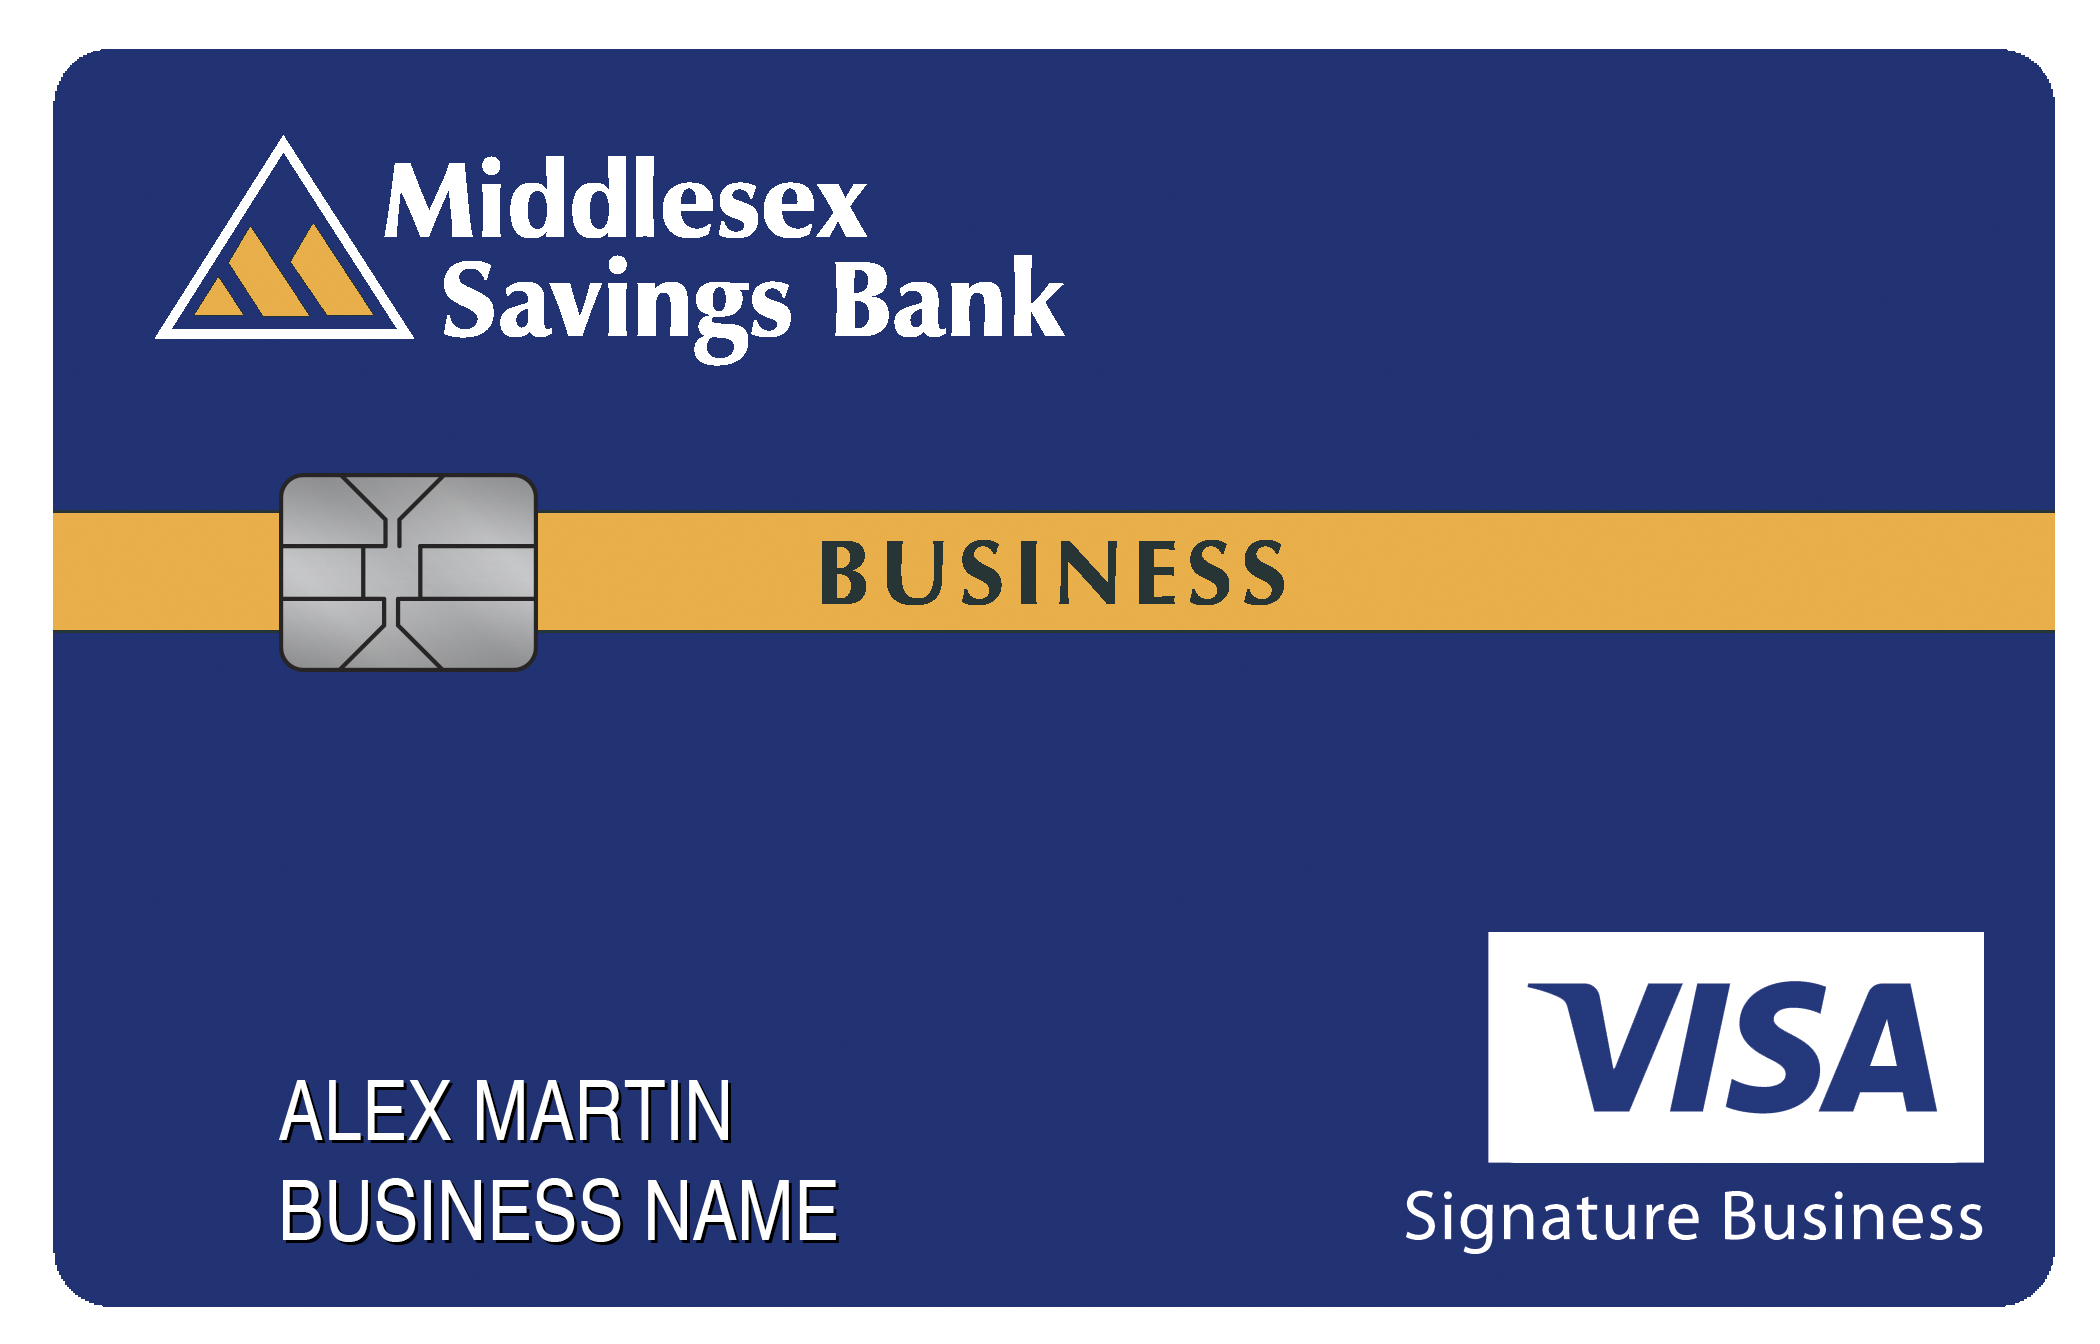 Middlesex Savings Bank Smart Business Rewards Card